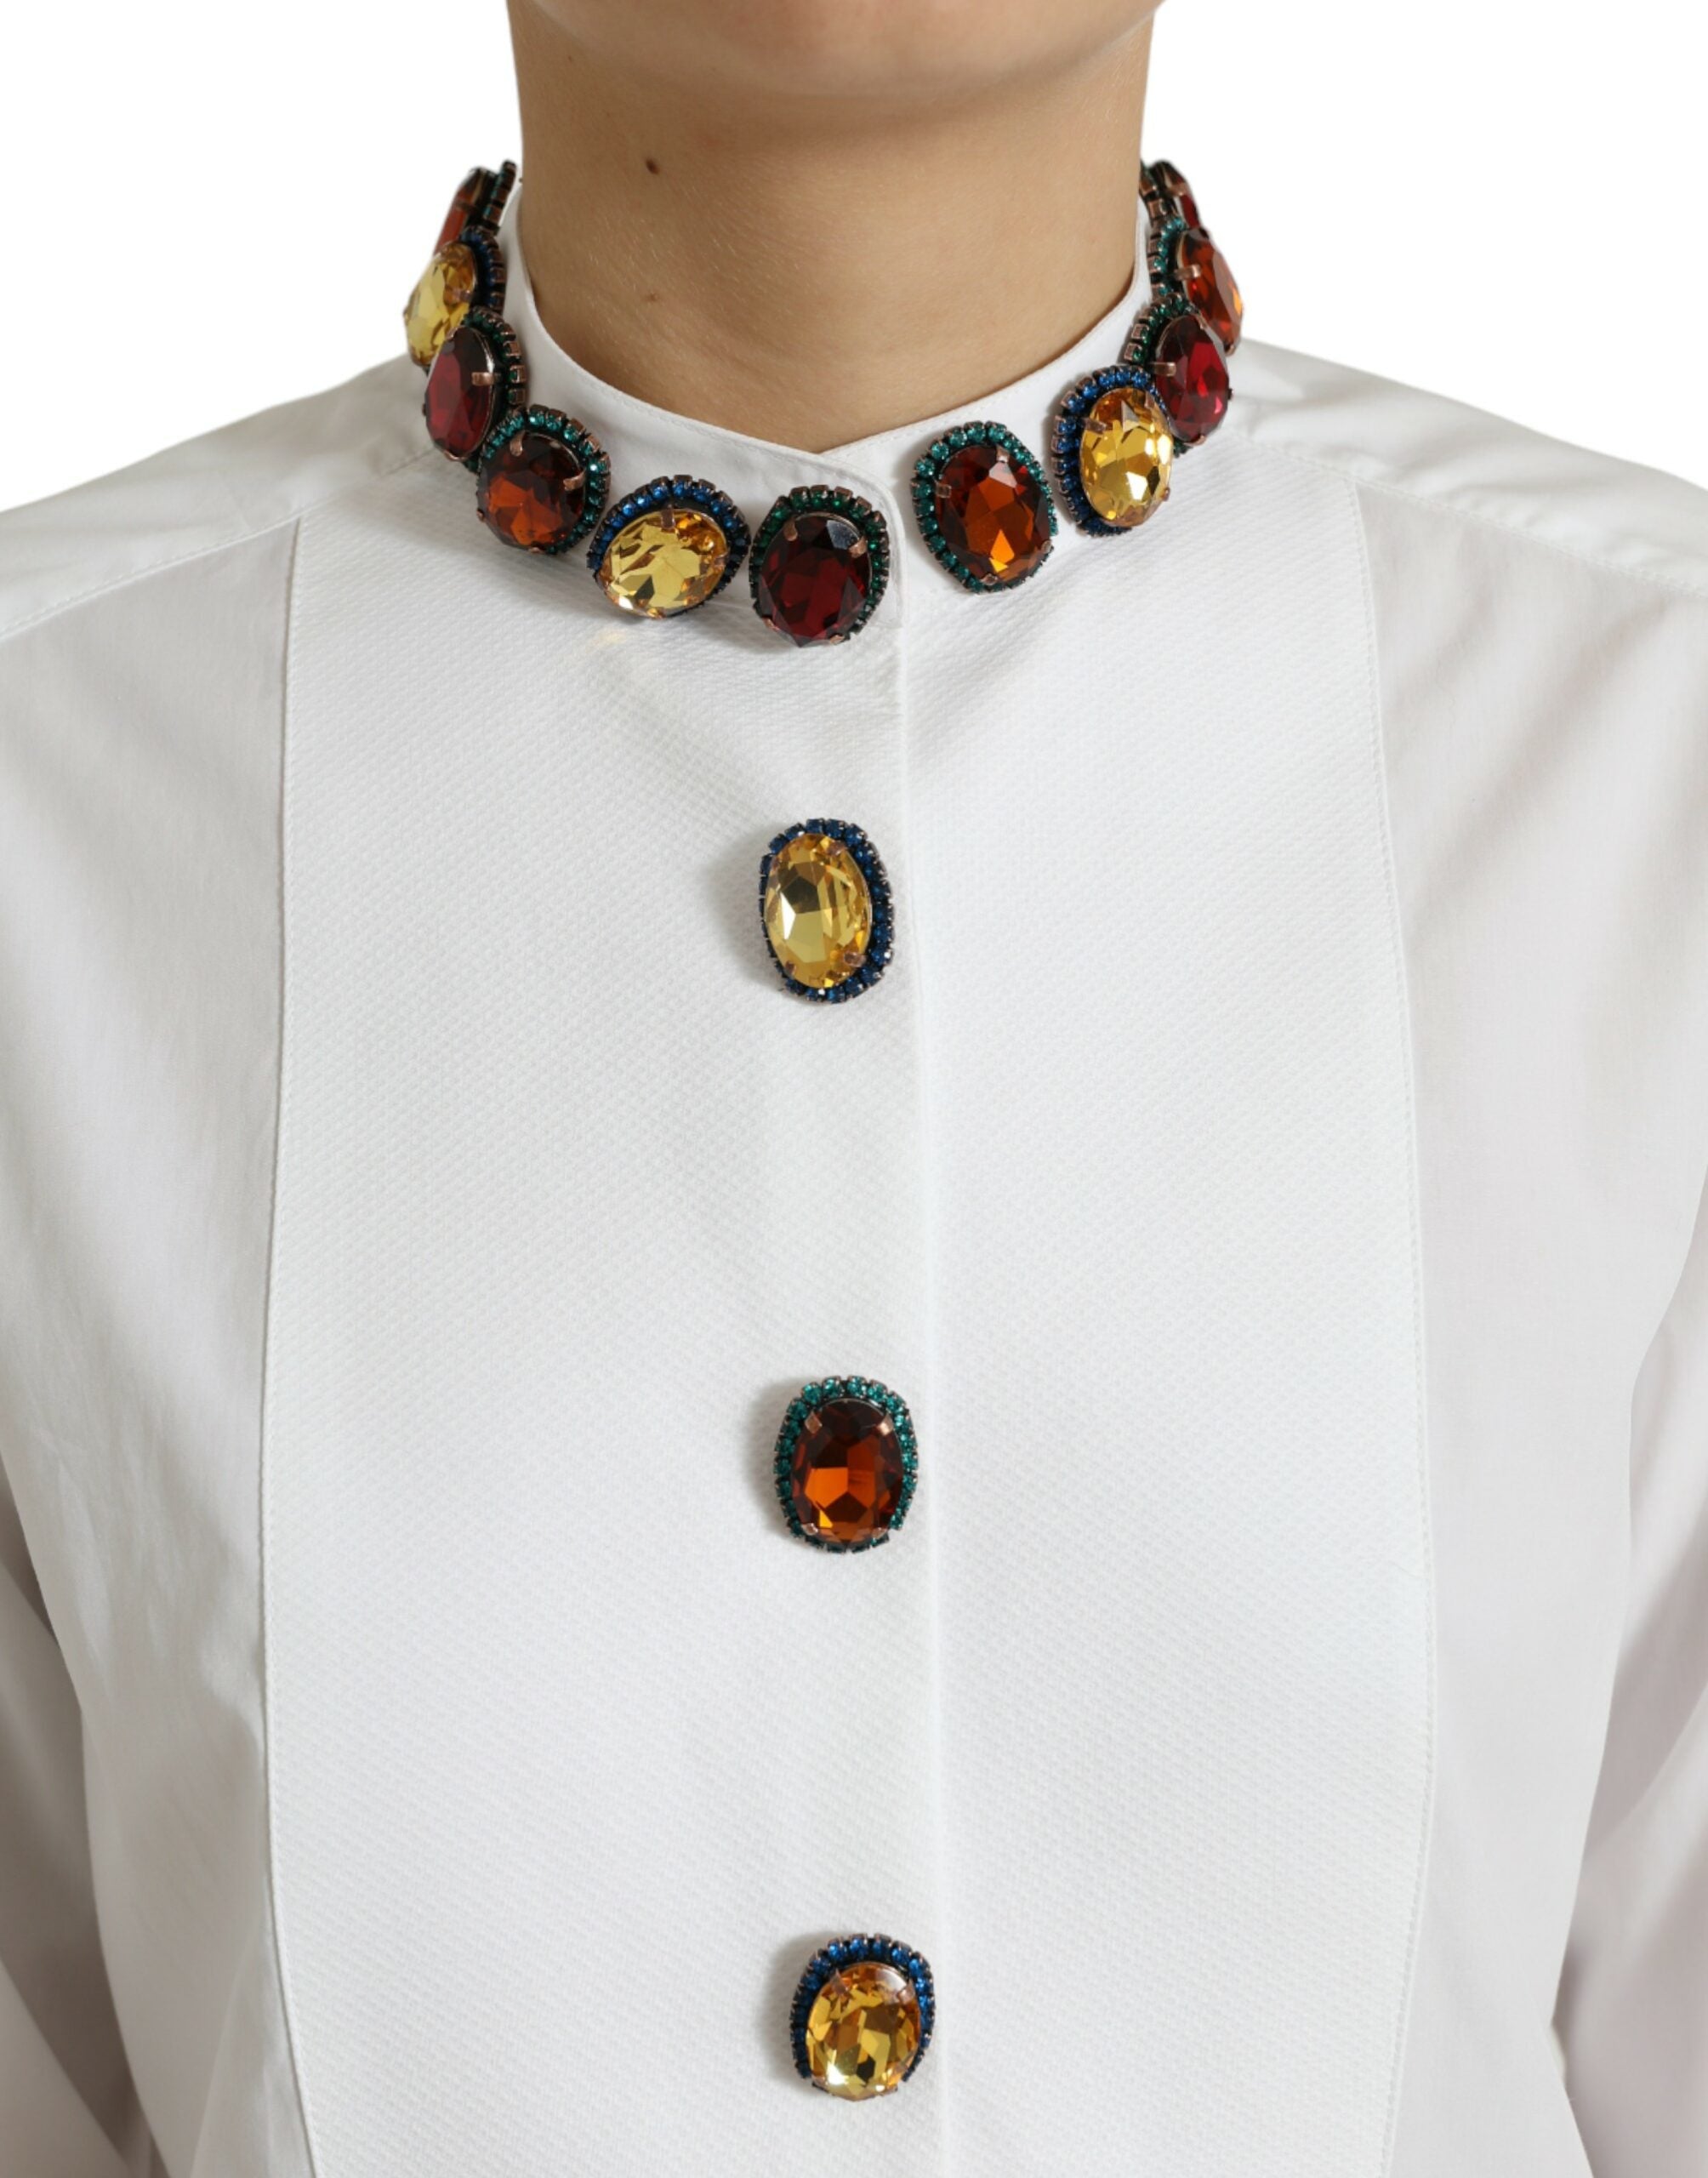 Dolce & Gabbana Top camisero de algodón blanco con adornos de cristales